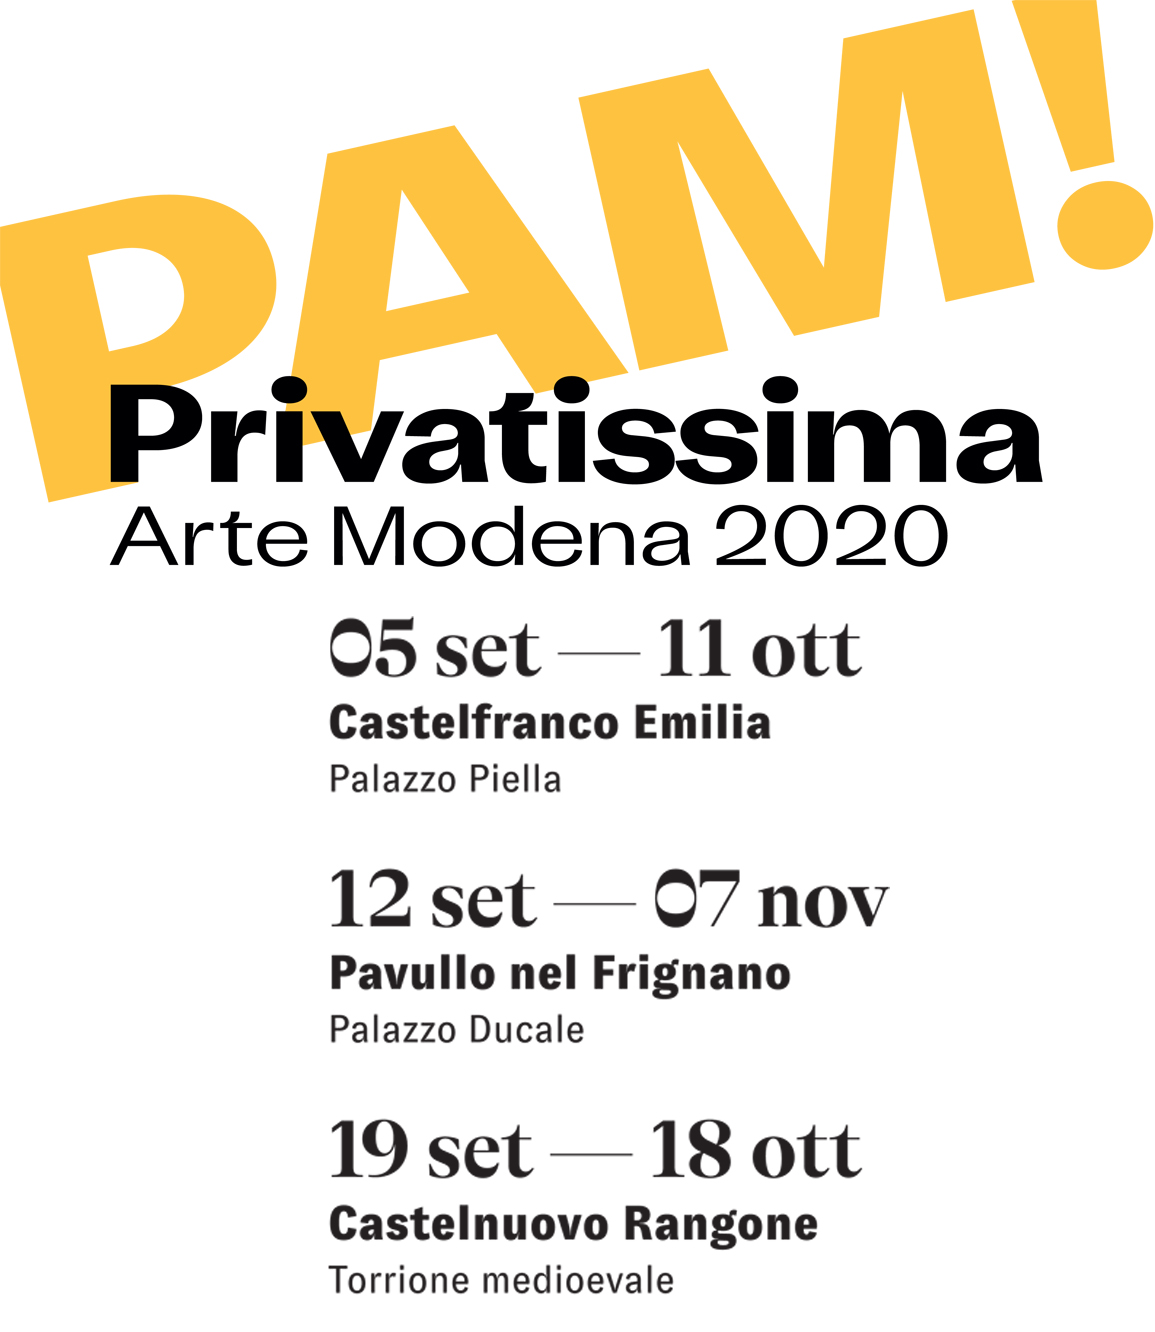 PAM! Privatissima Arte Modena